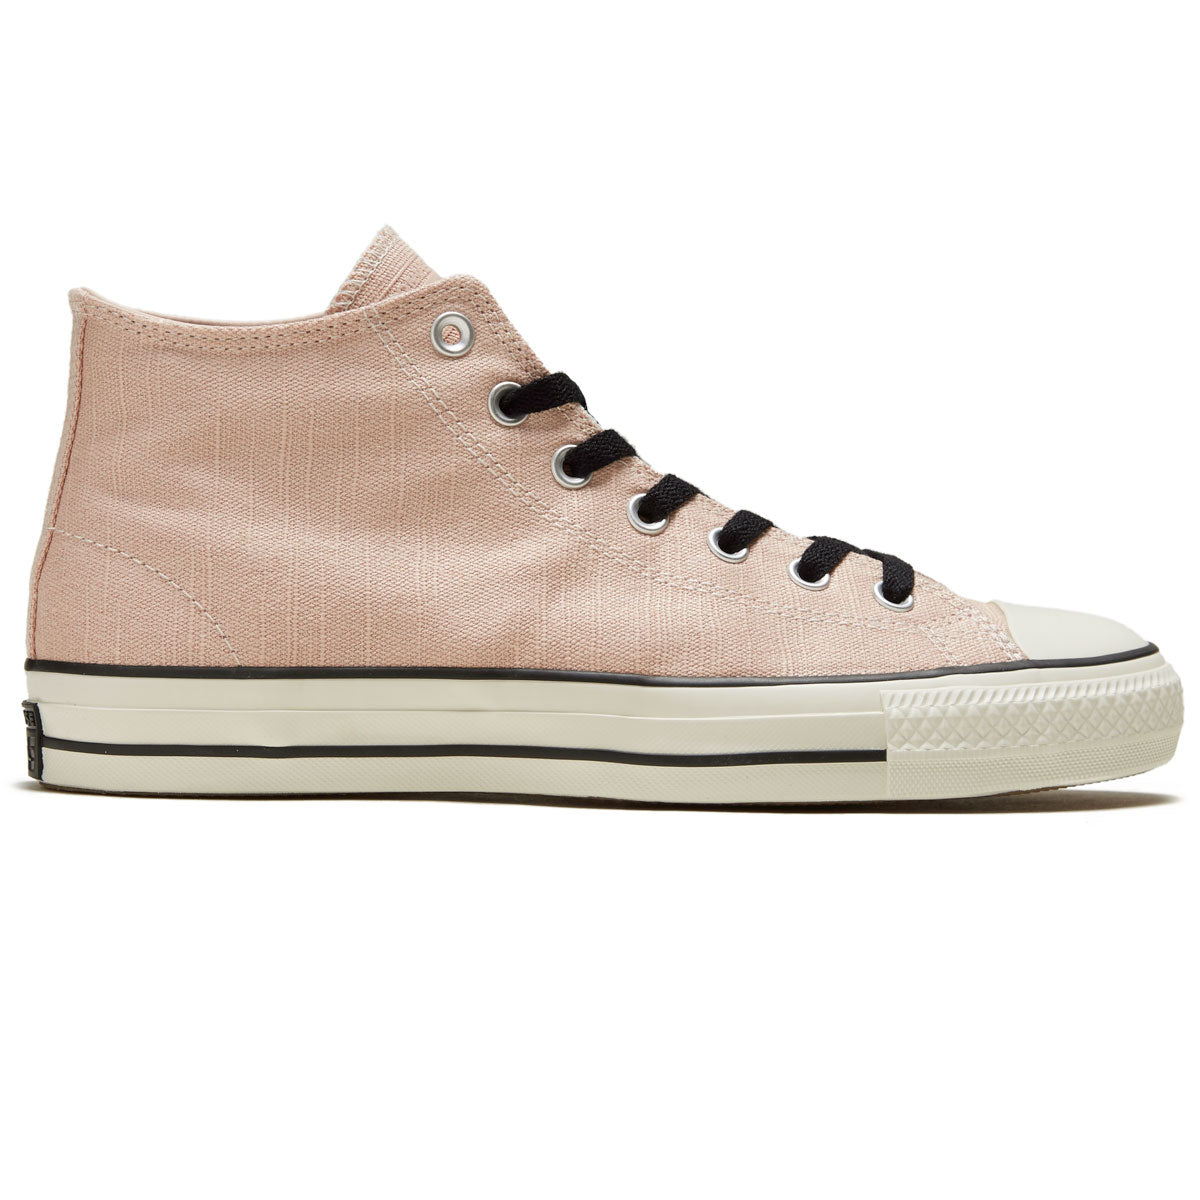 Converse Chuck Taylor All Star Pro Hemp Mid Shoes - Pink Sage/Egret/Black image 1